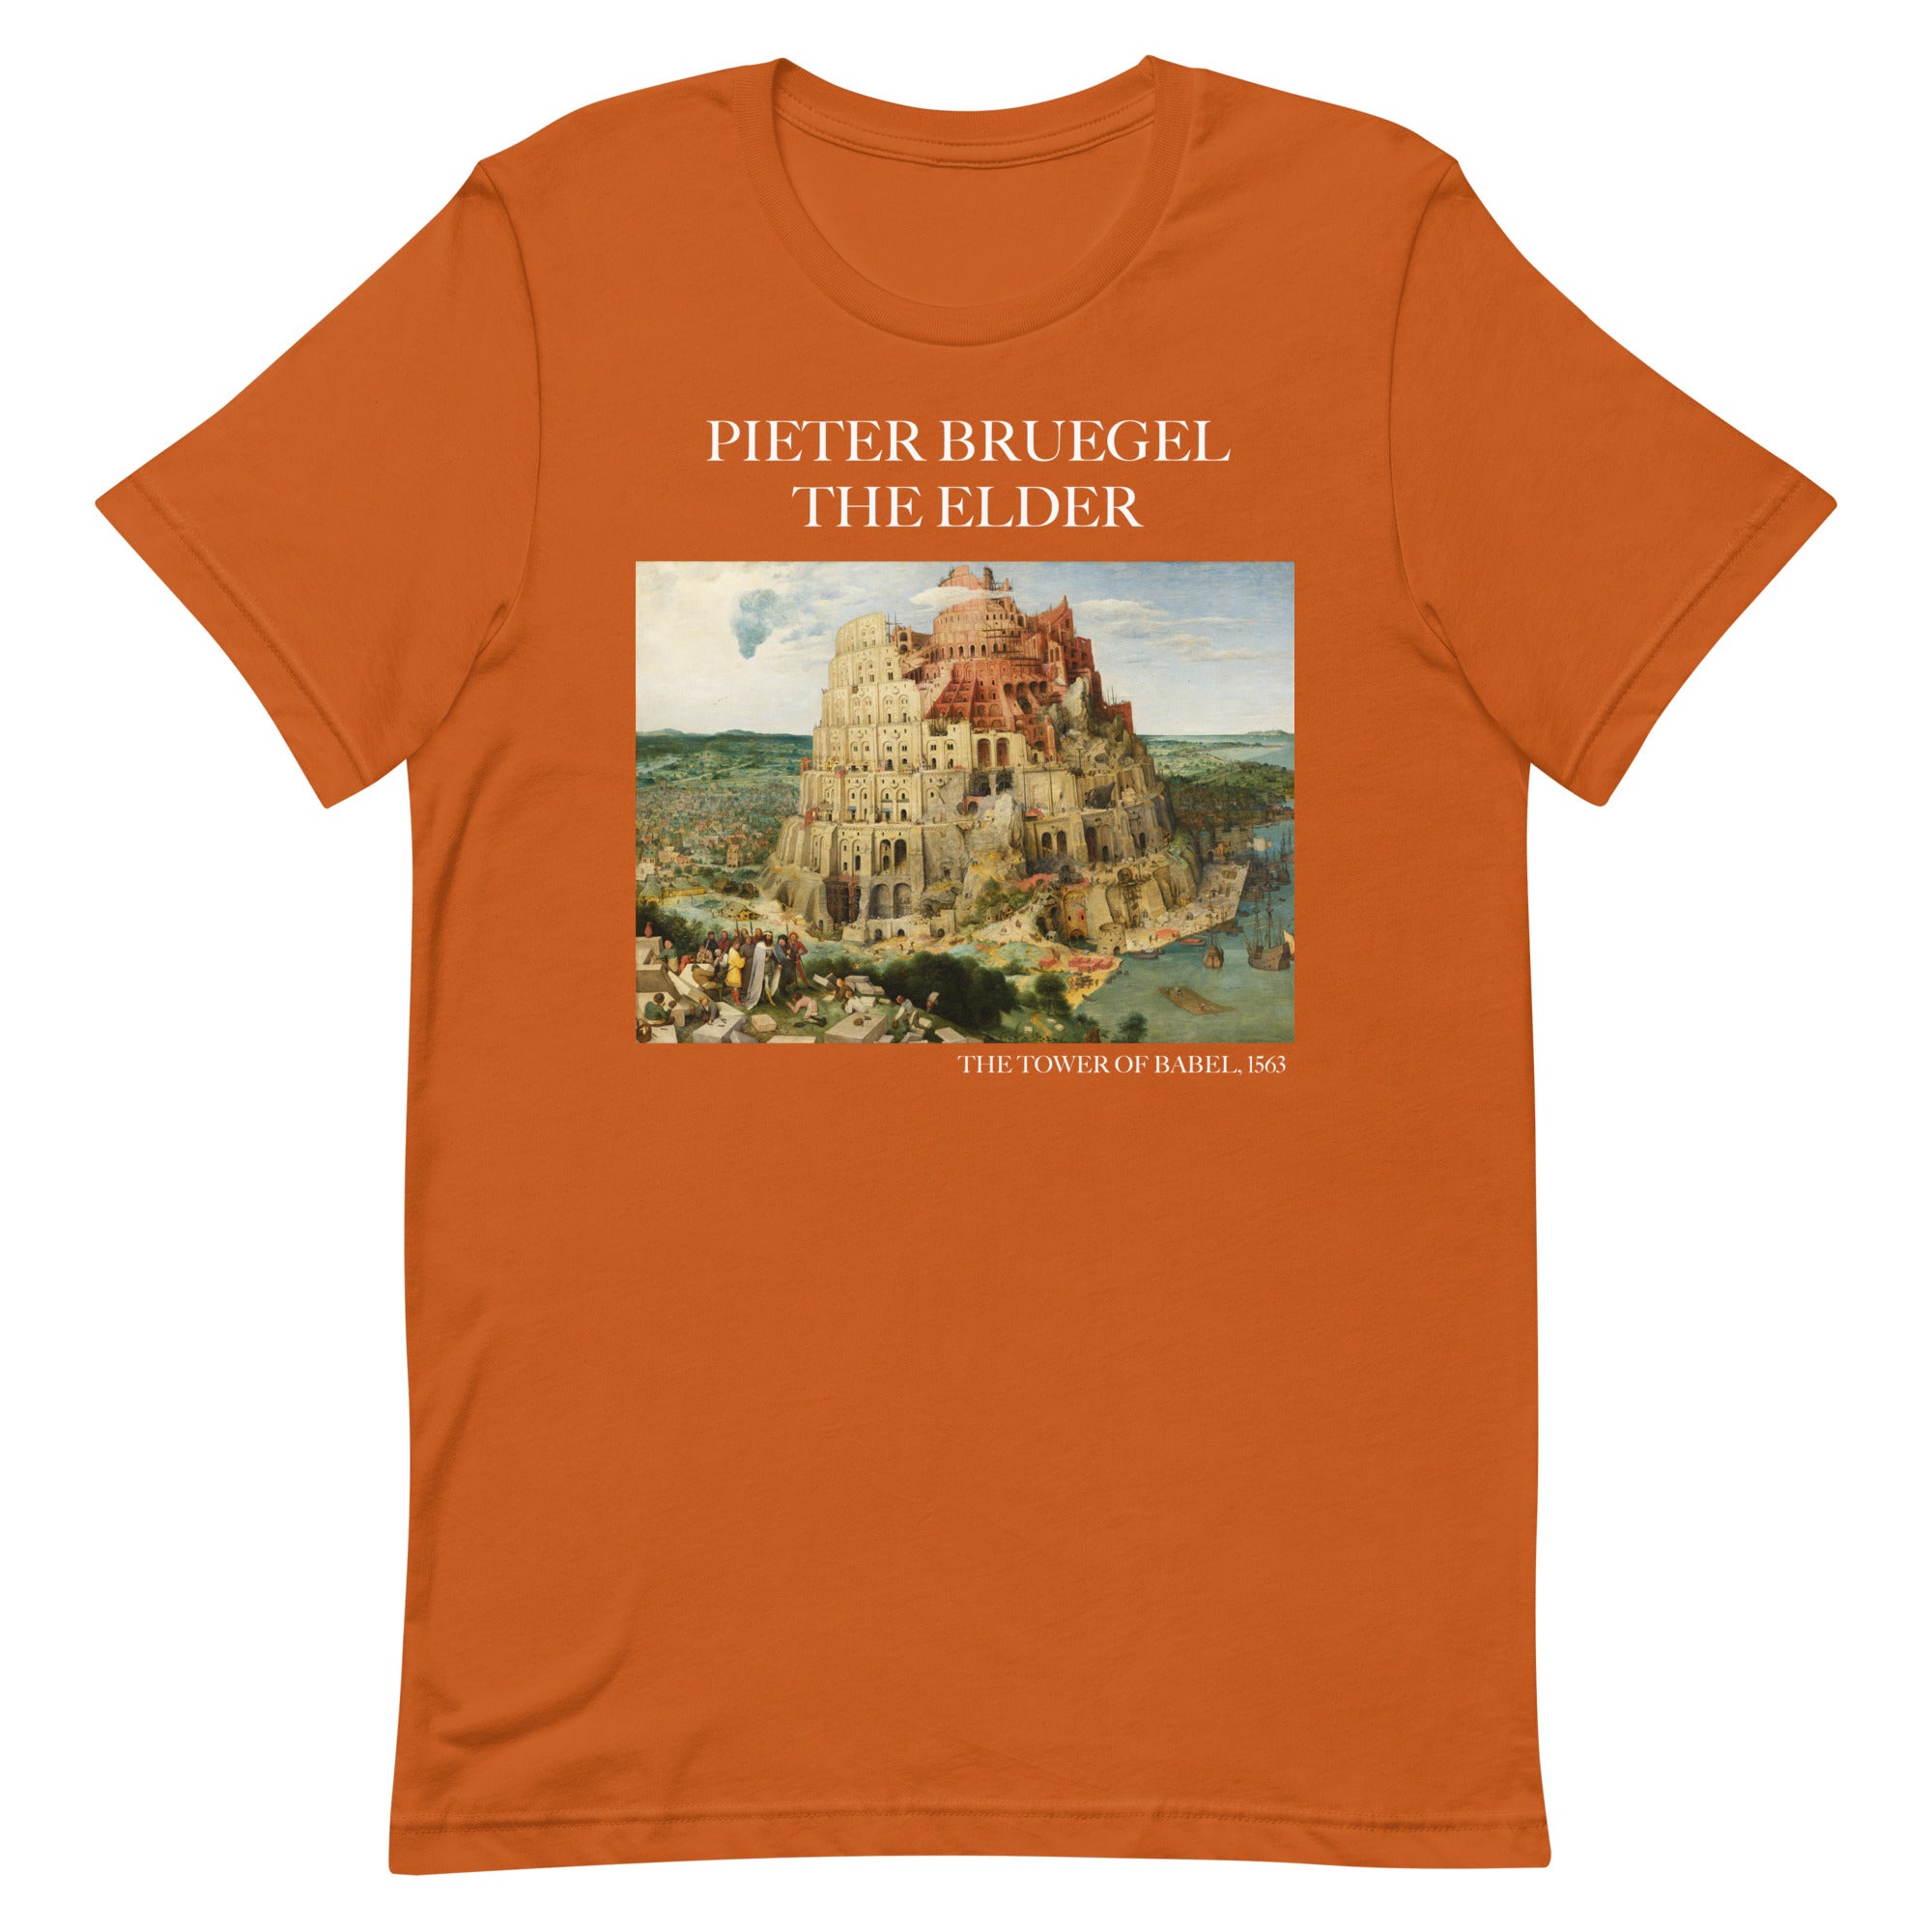 Pieter Bruegel the Elder 'The Tower of Babel' Famous Painting T-Shirt | Unisex Classic Art Tee